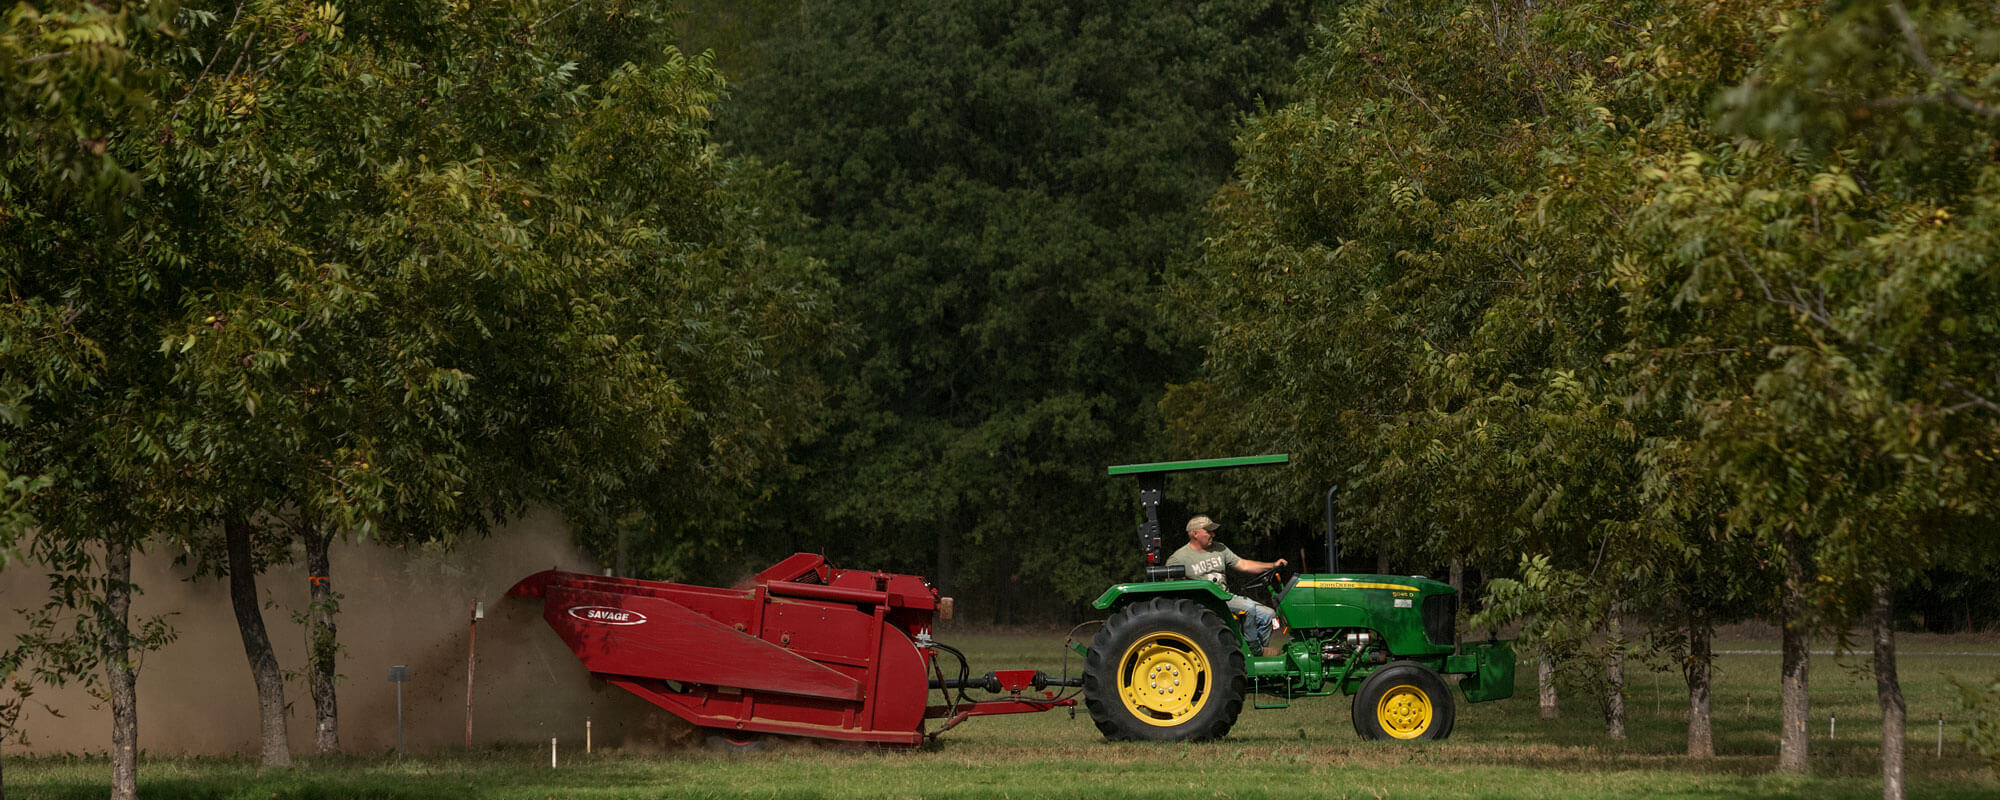 Tractor pulling pecan harvester